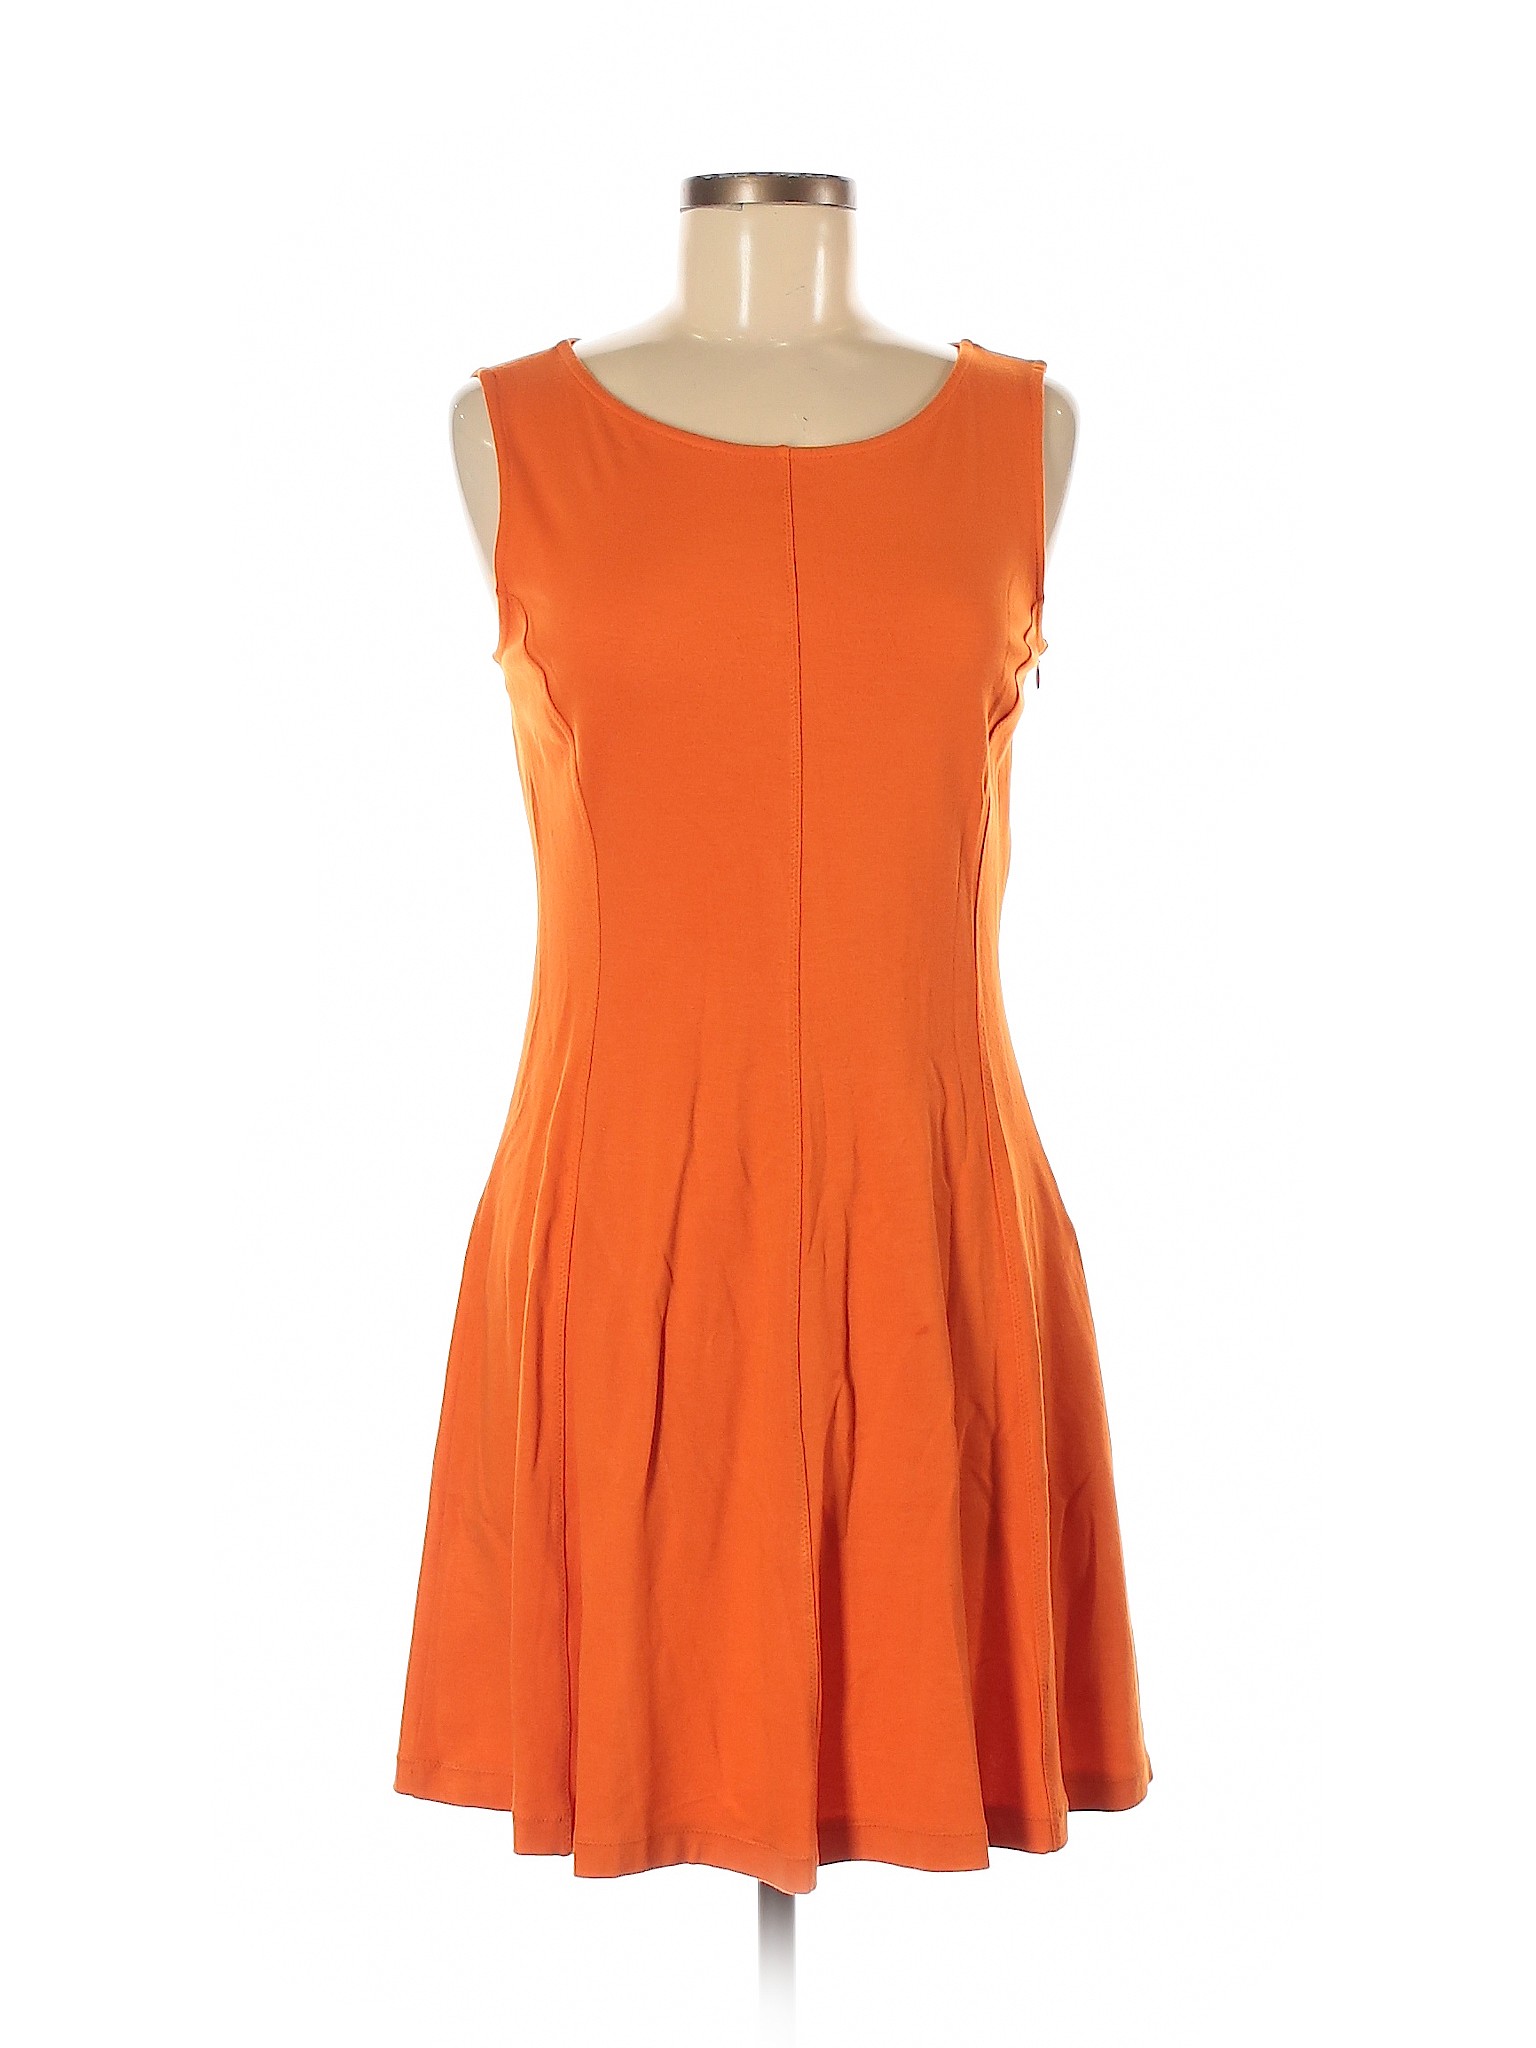 Banana Republic Women Orange Casual Dress 8 | eBay